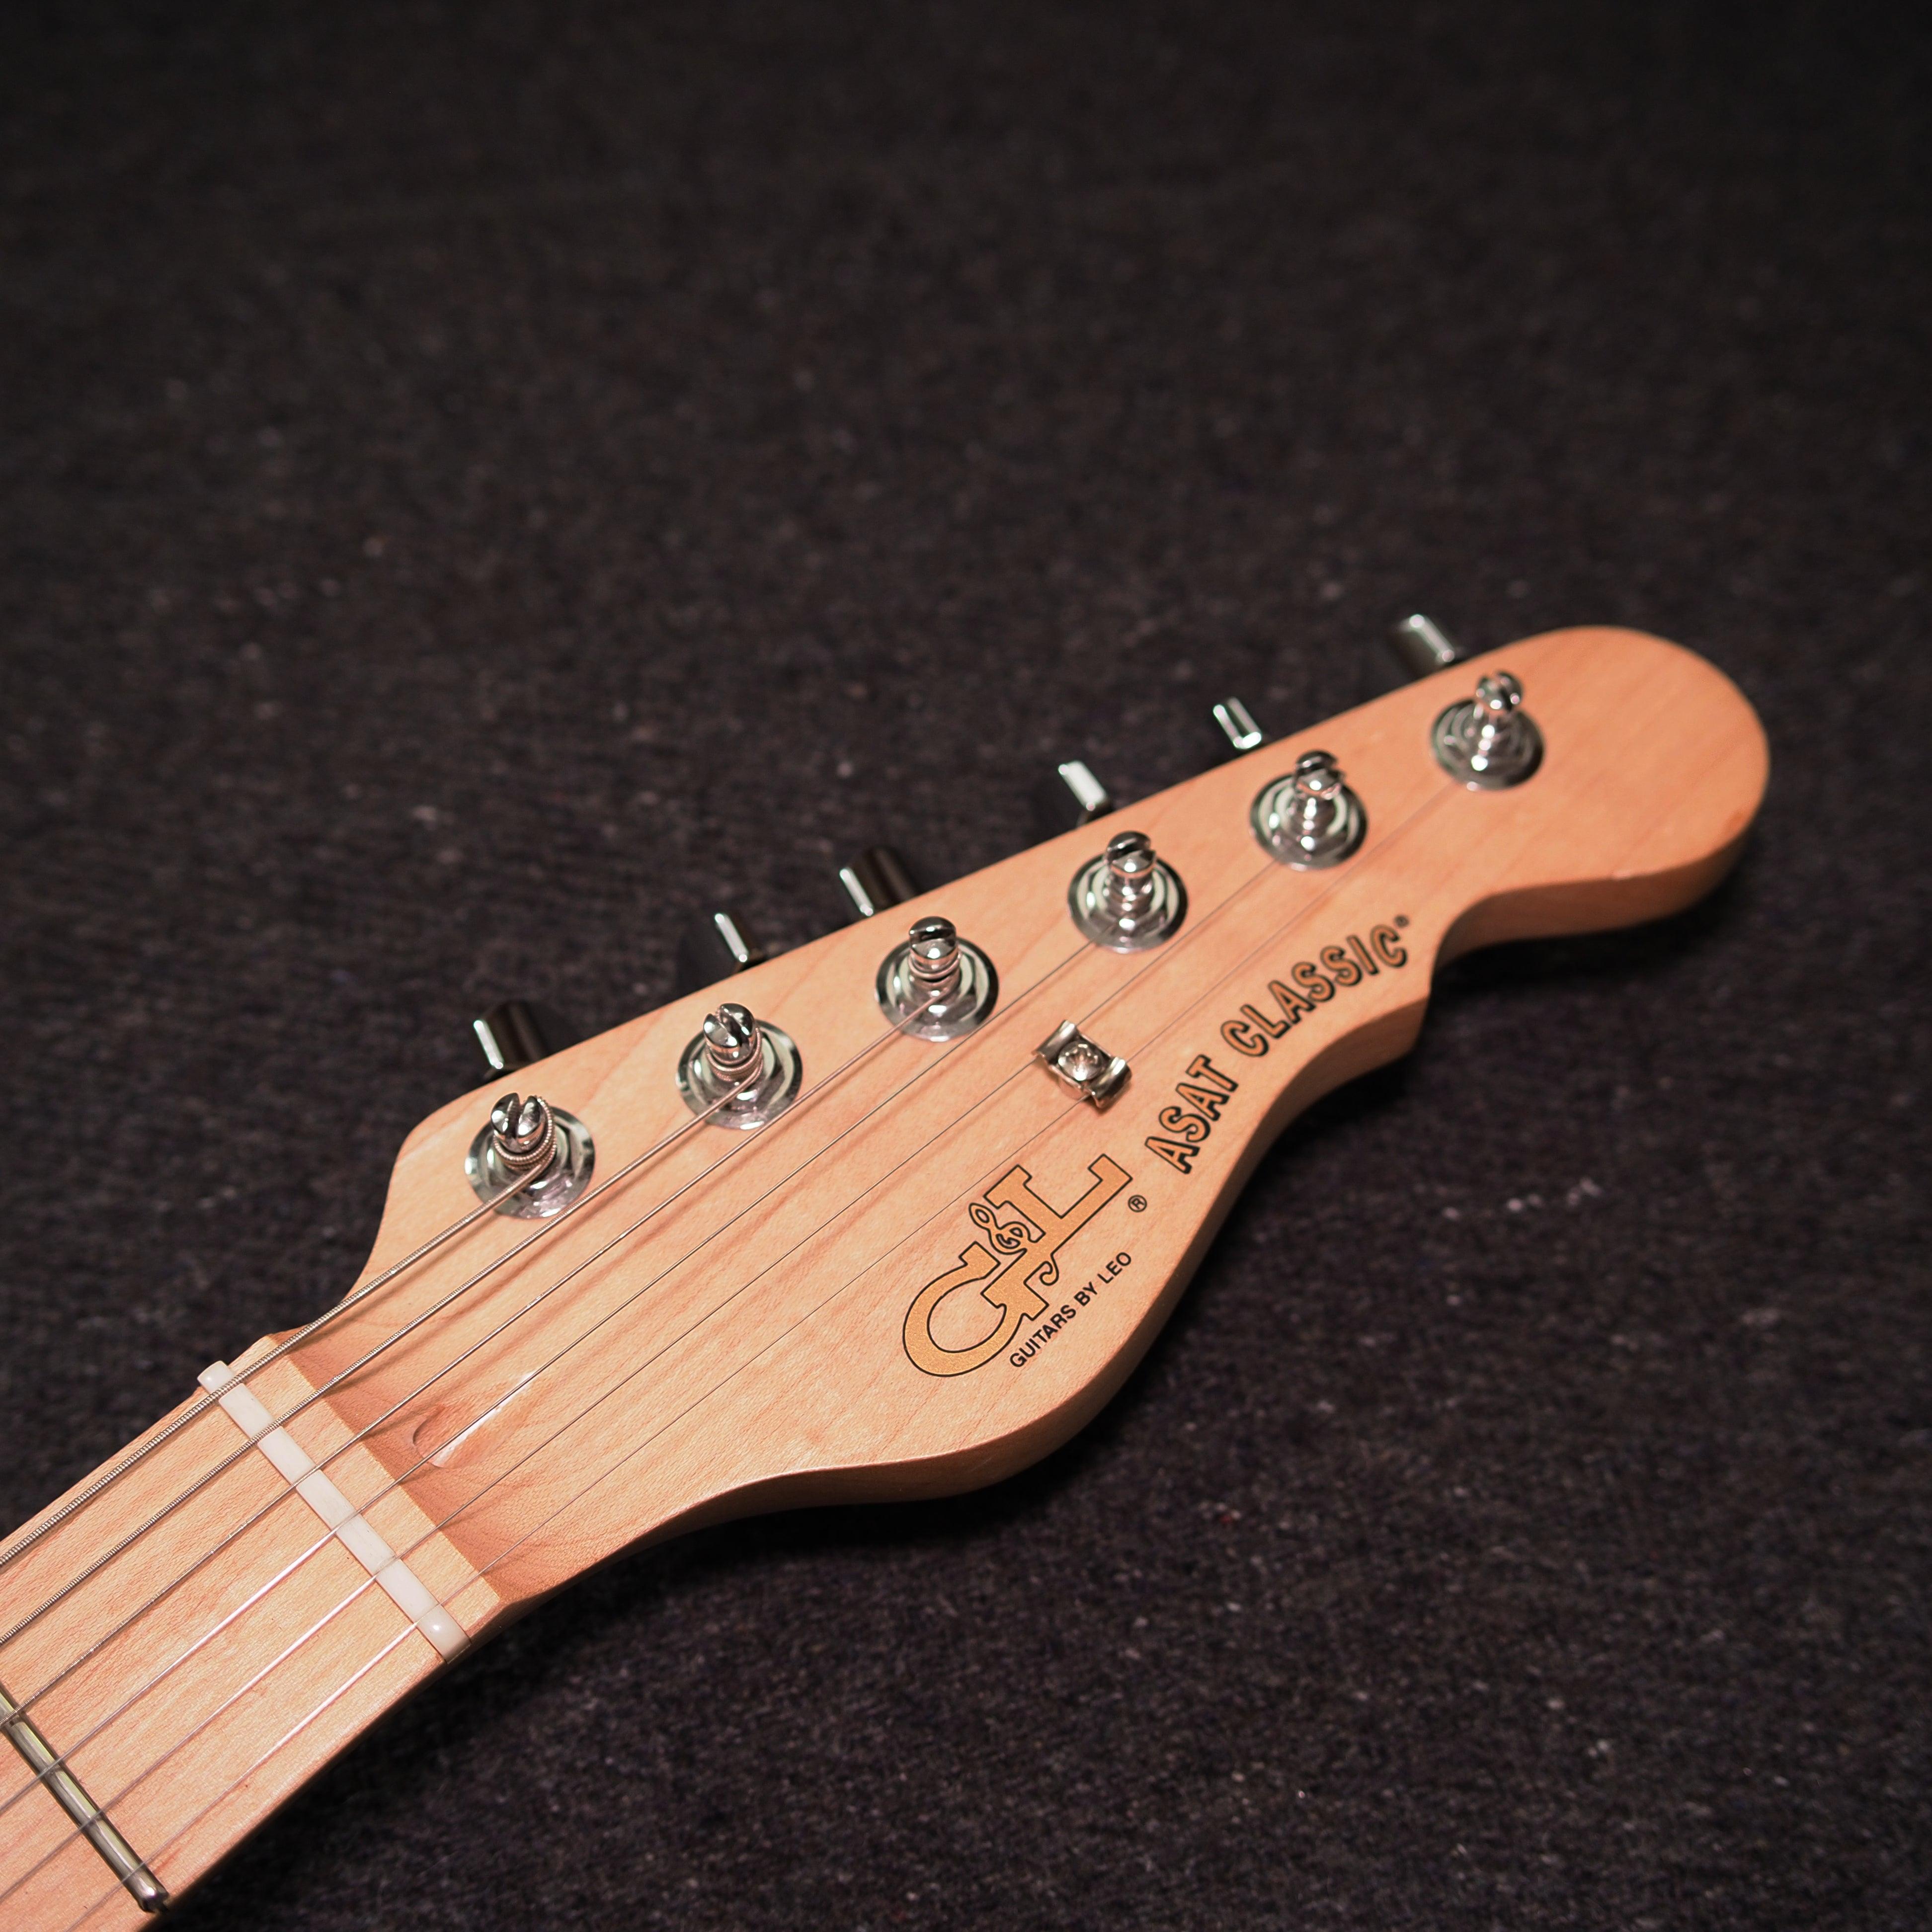 G&L Fullerton Standard ASAT Classic in Spanish Copper Metallic, from 2018 - wurst.guitars